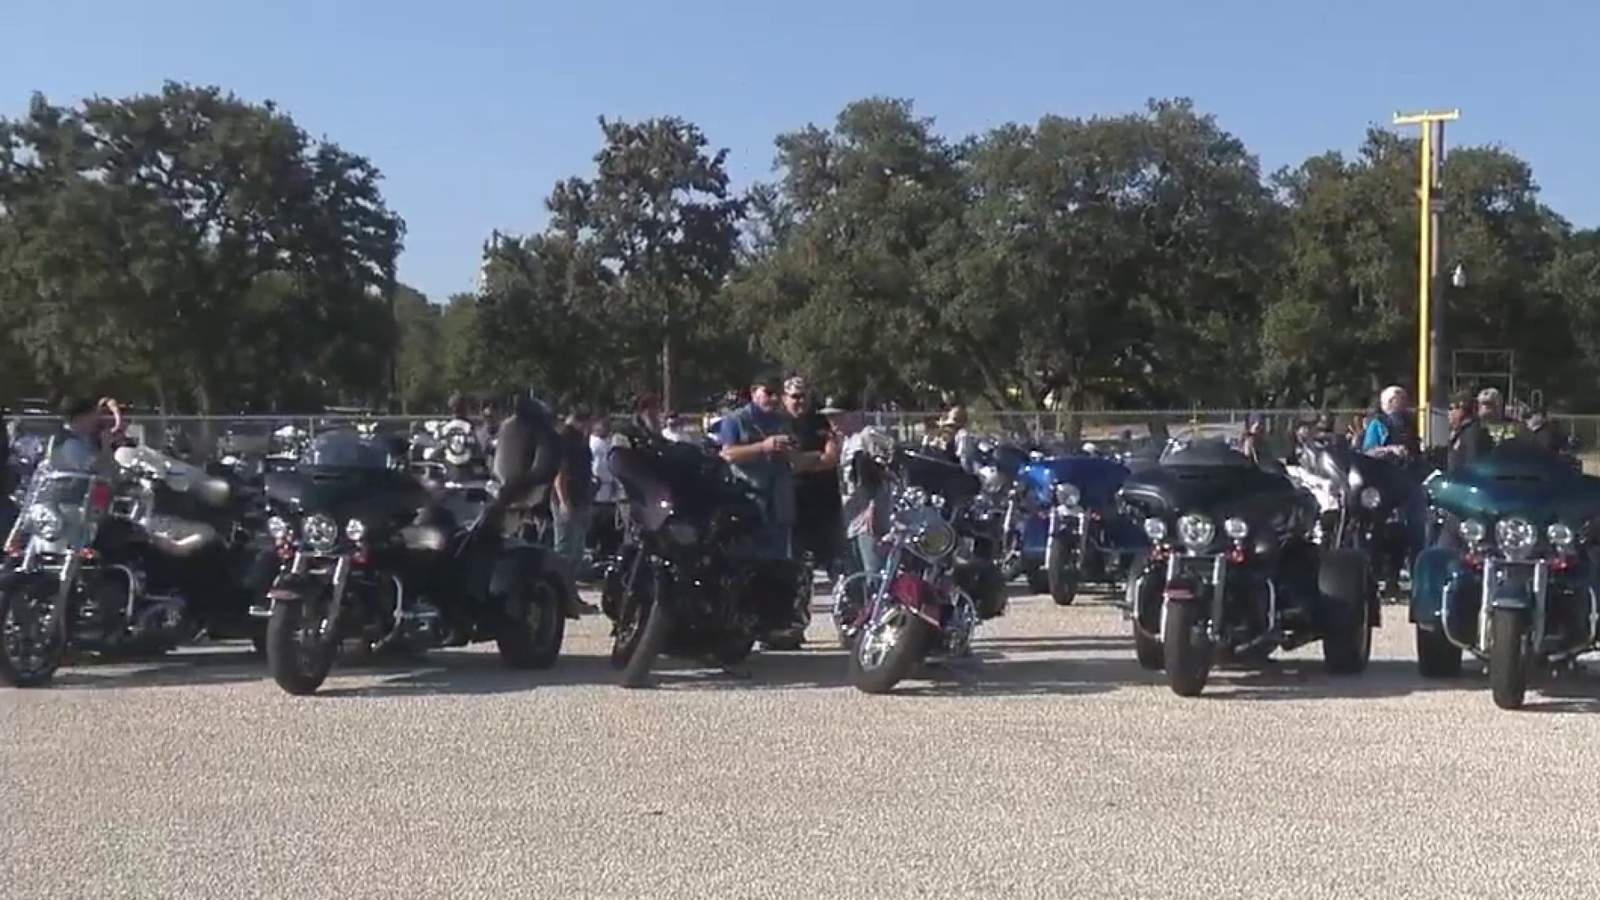 Memorial ride held in honor of four Thin Blue Line Motorcycle Club members killed in crash